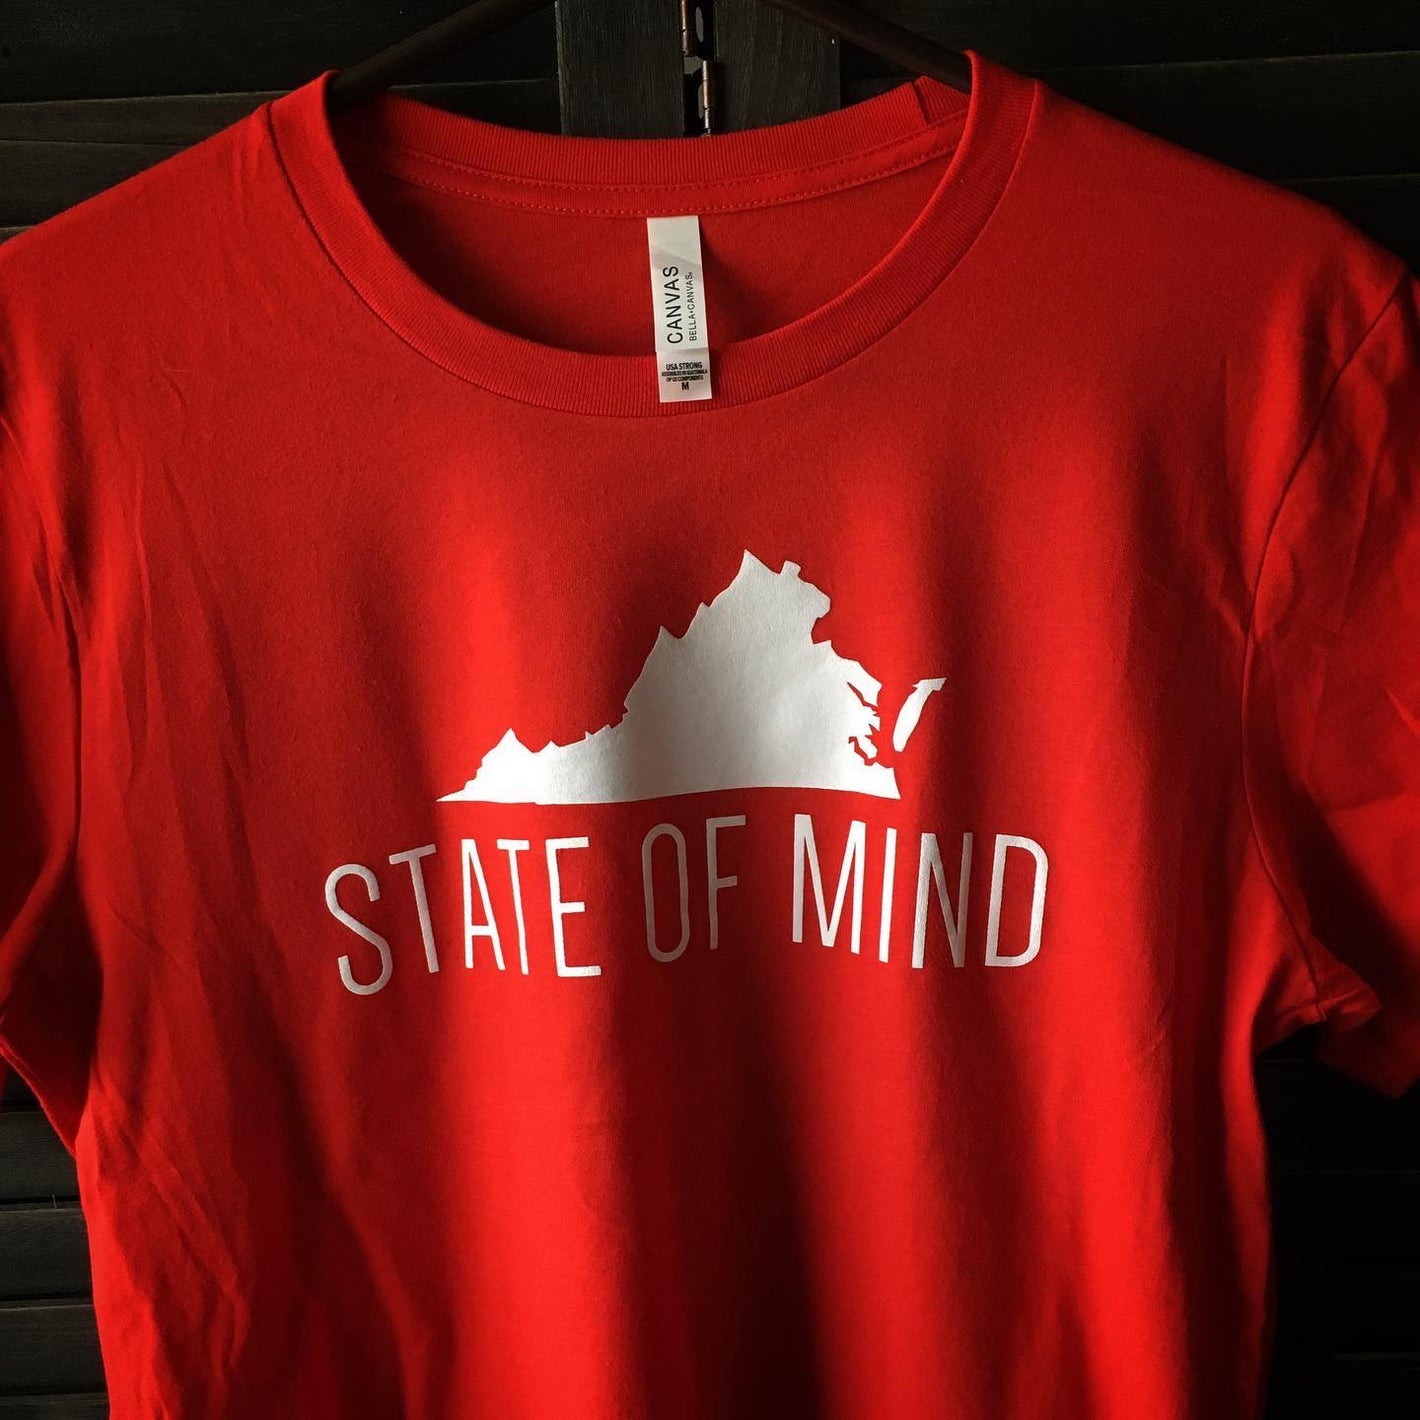 Virginia state of mind custom screen printed t-shirt logo rva